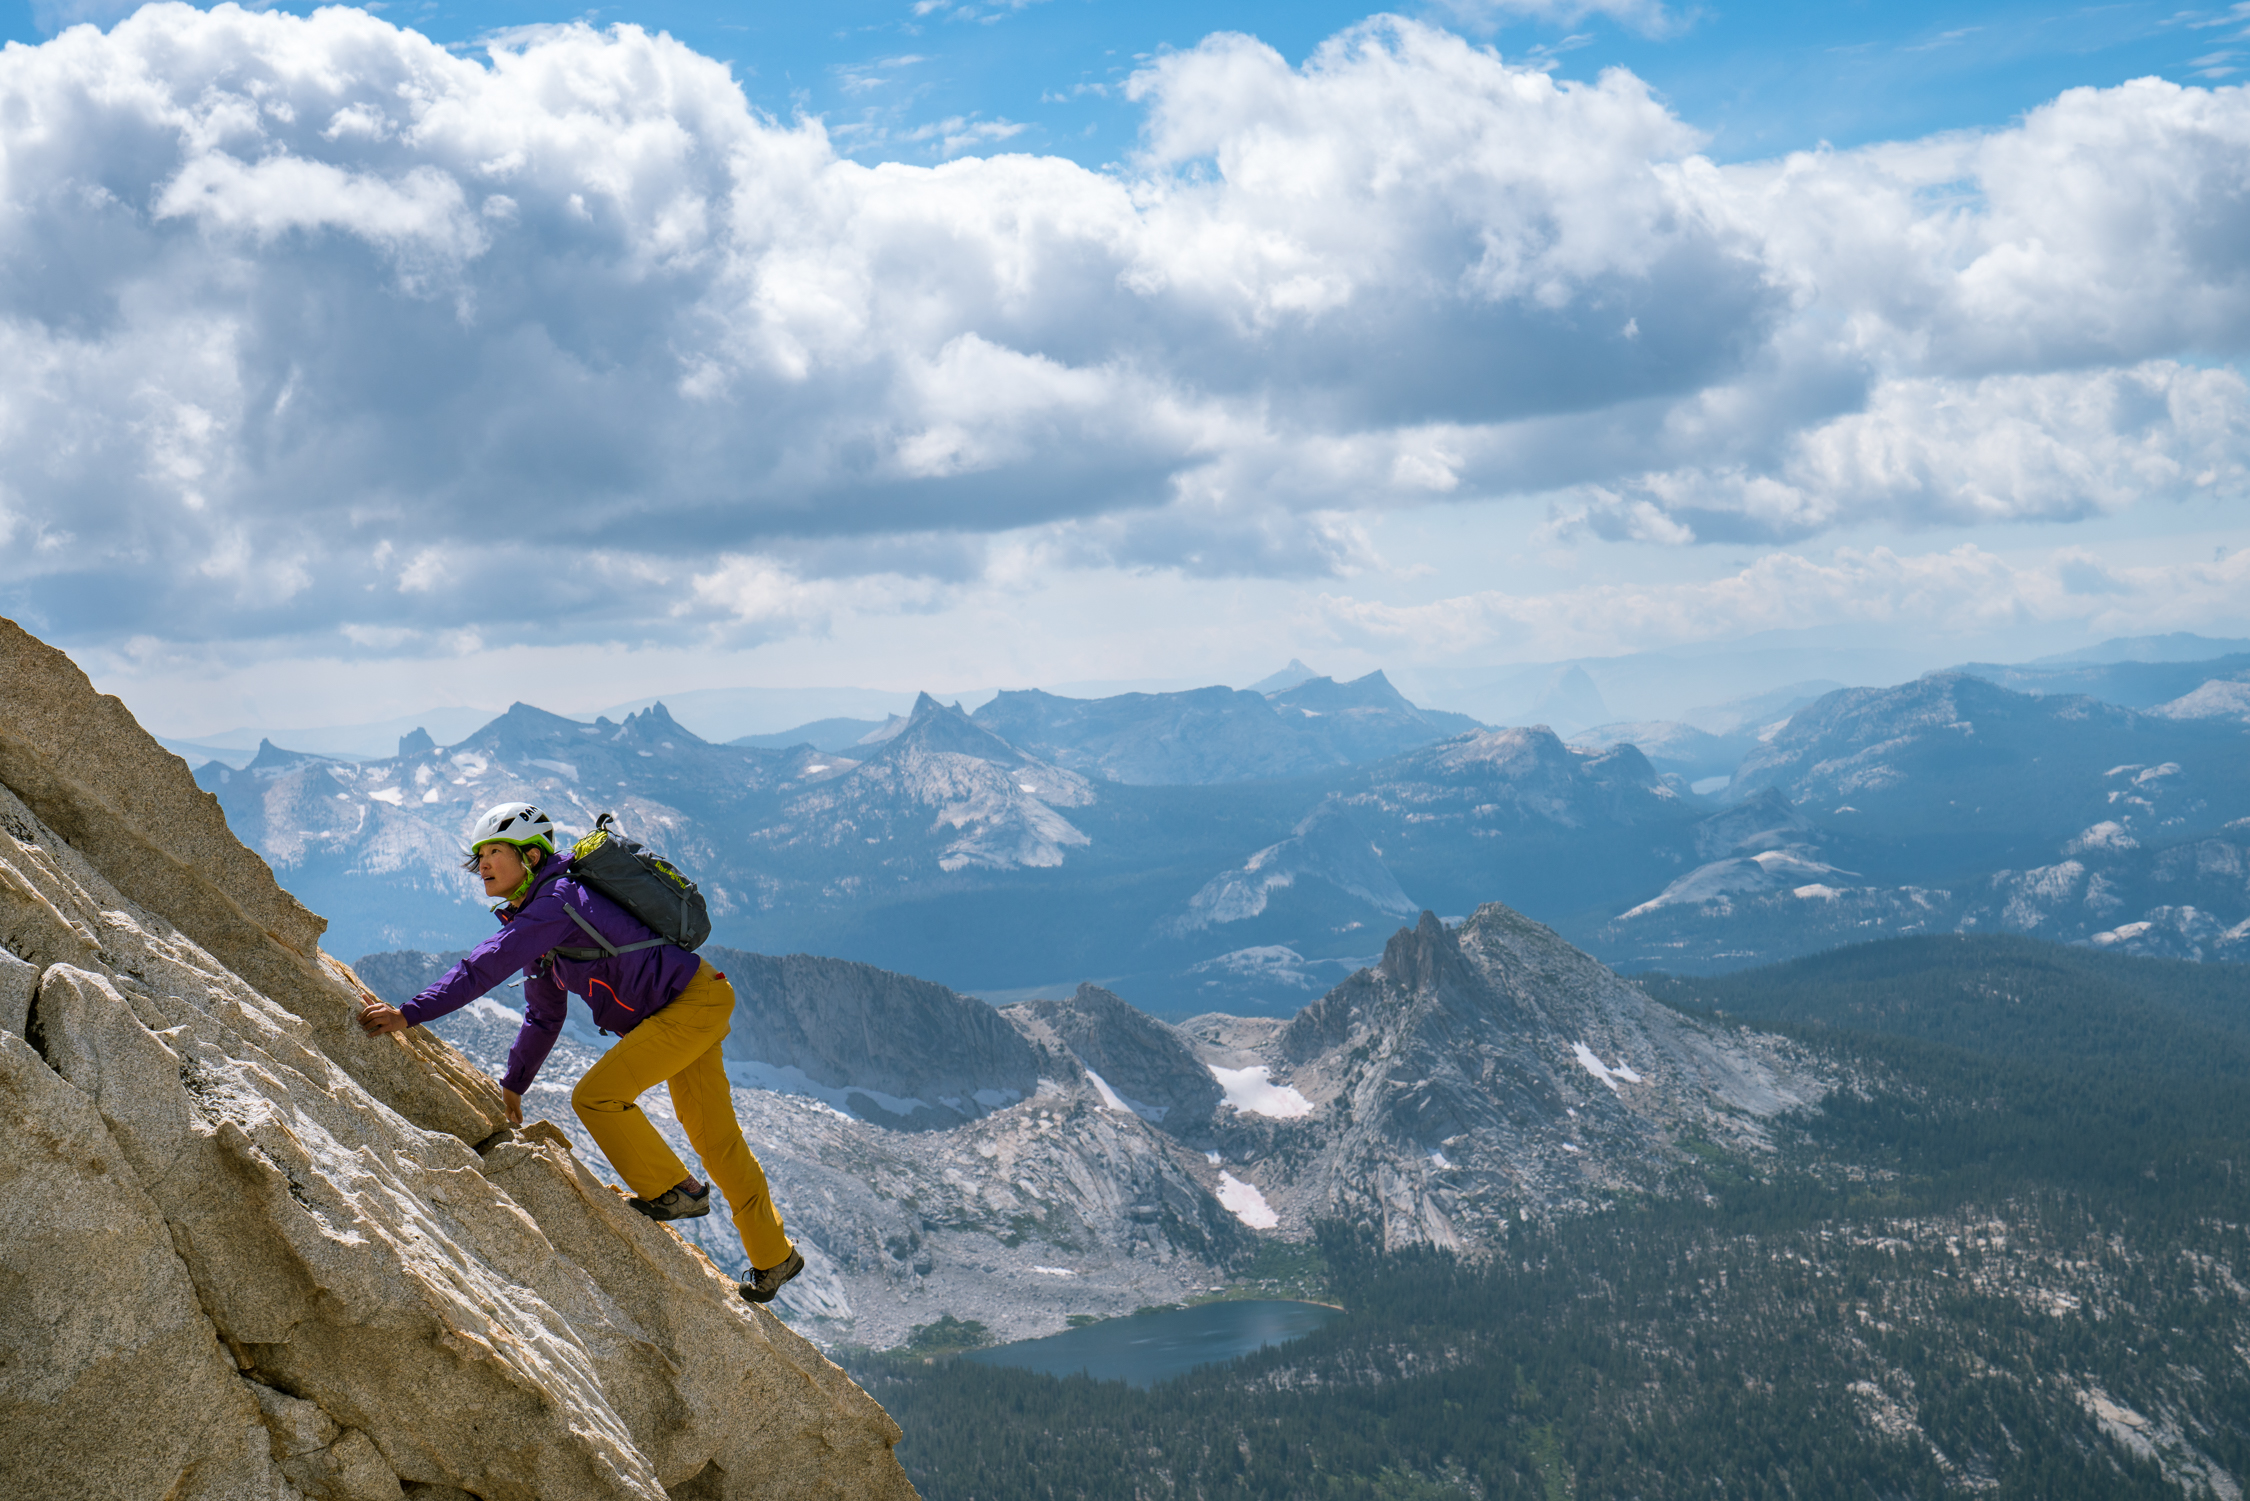 Shelma enjoying the alpine air on Mt Conness in the High Sierra, California. © Drew Smith